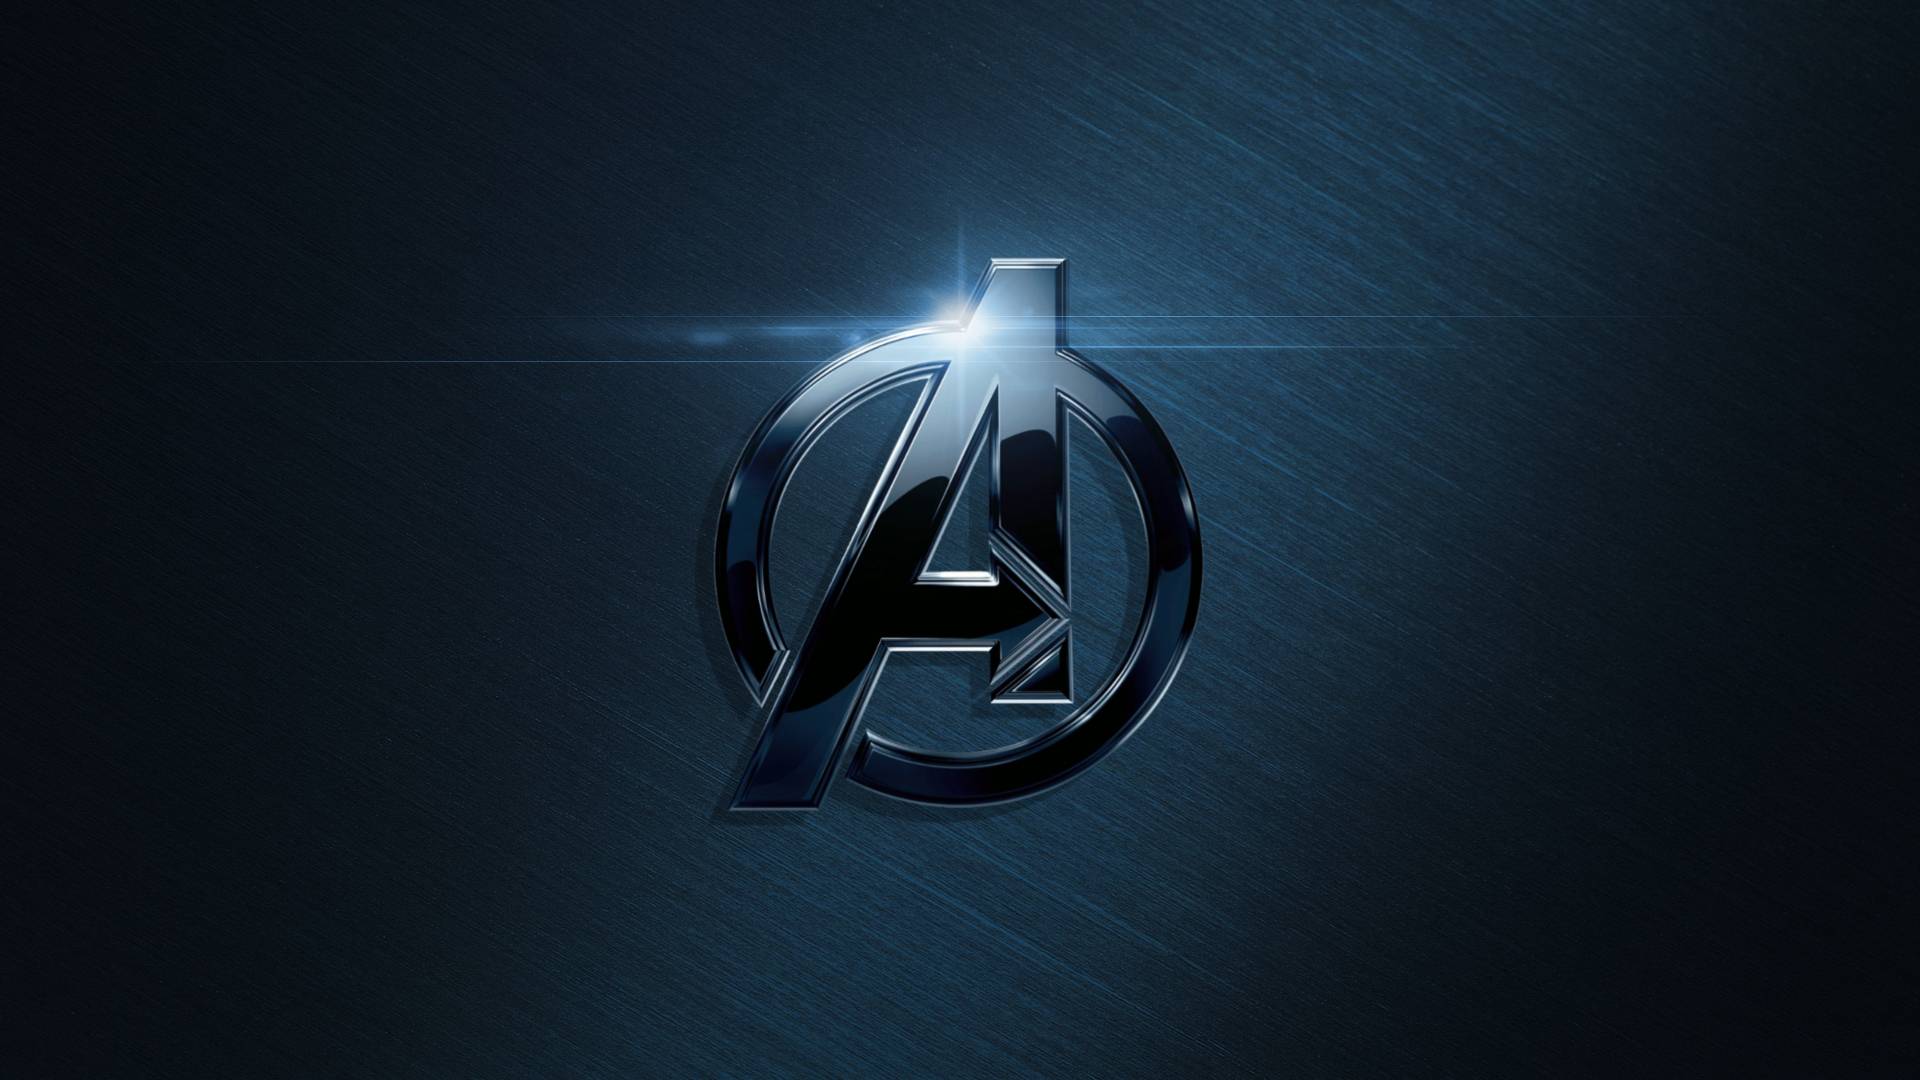 Avengers Logo Wallpaper 39731 1920x1080 px